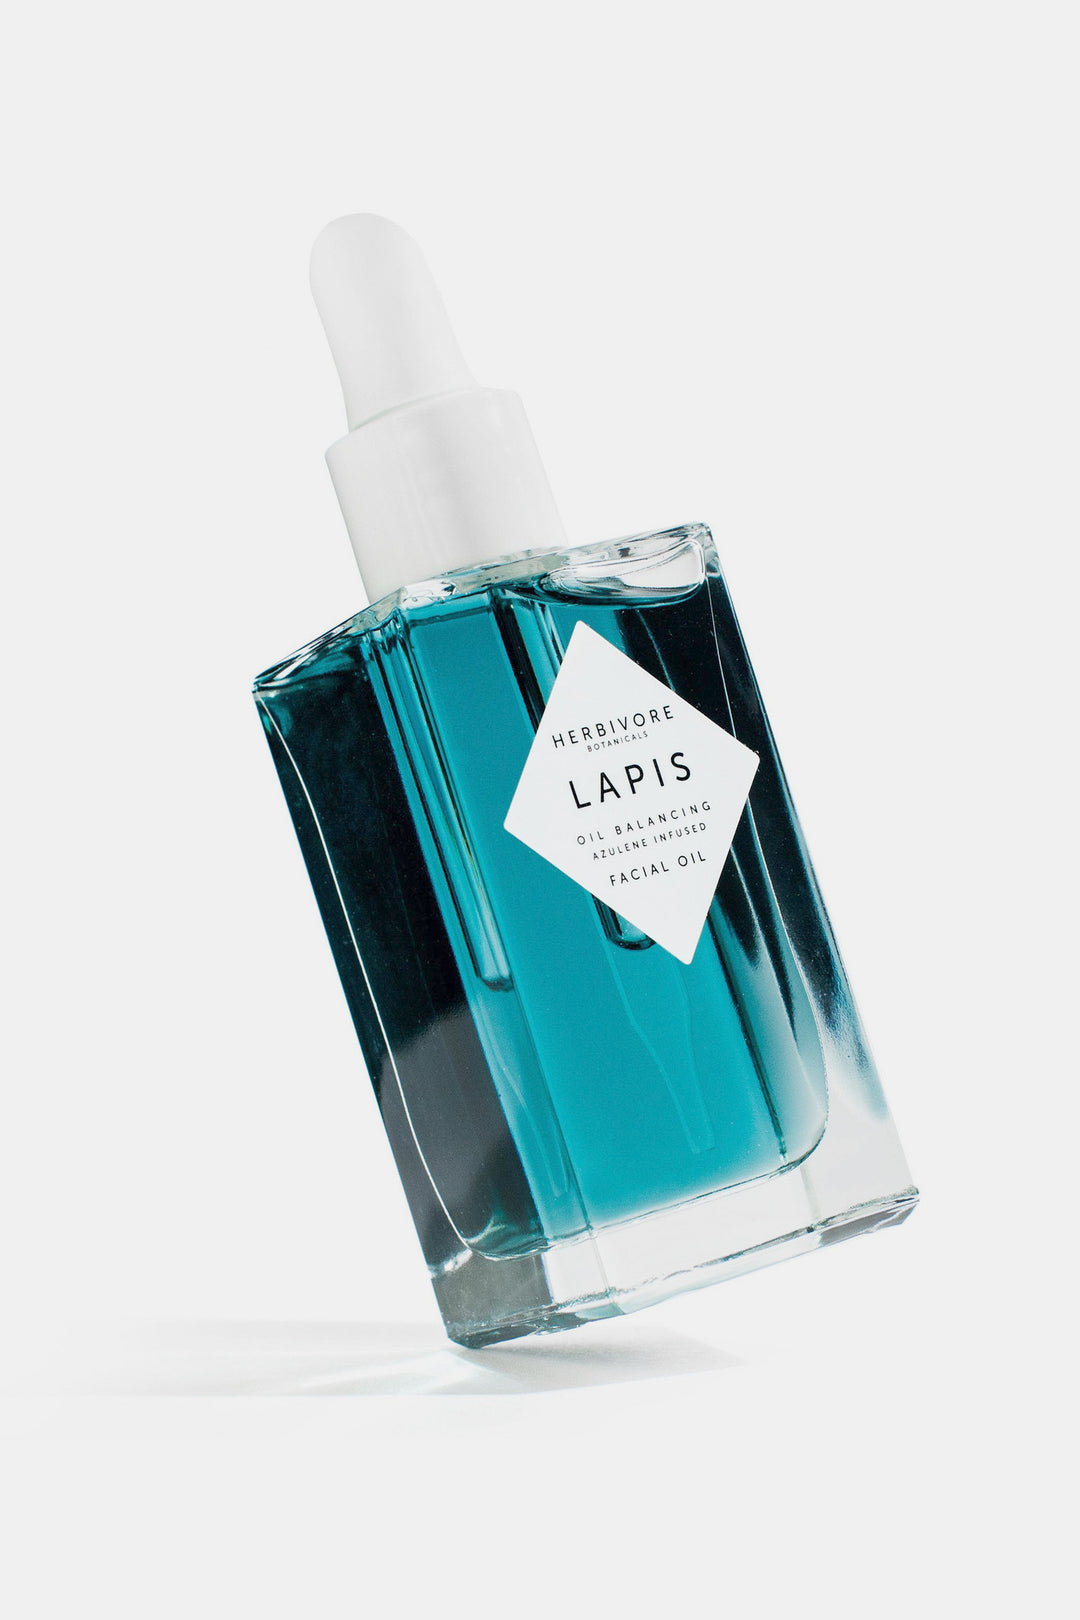 Lapis Lazuli Gesichts-Öl